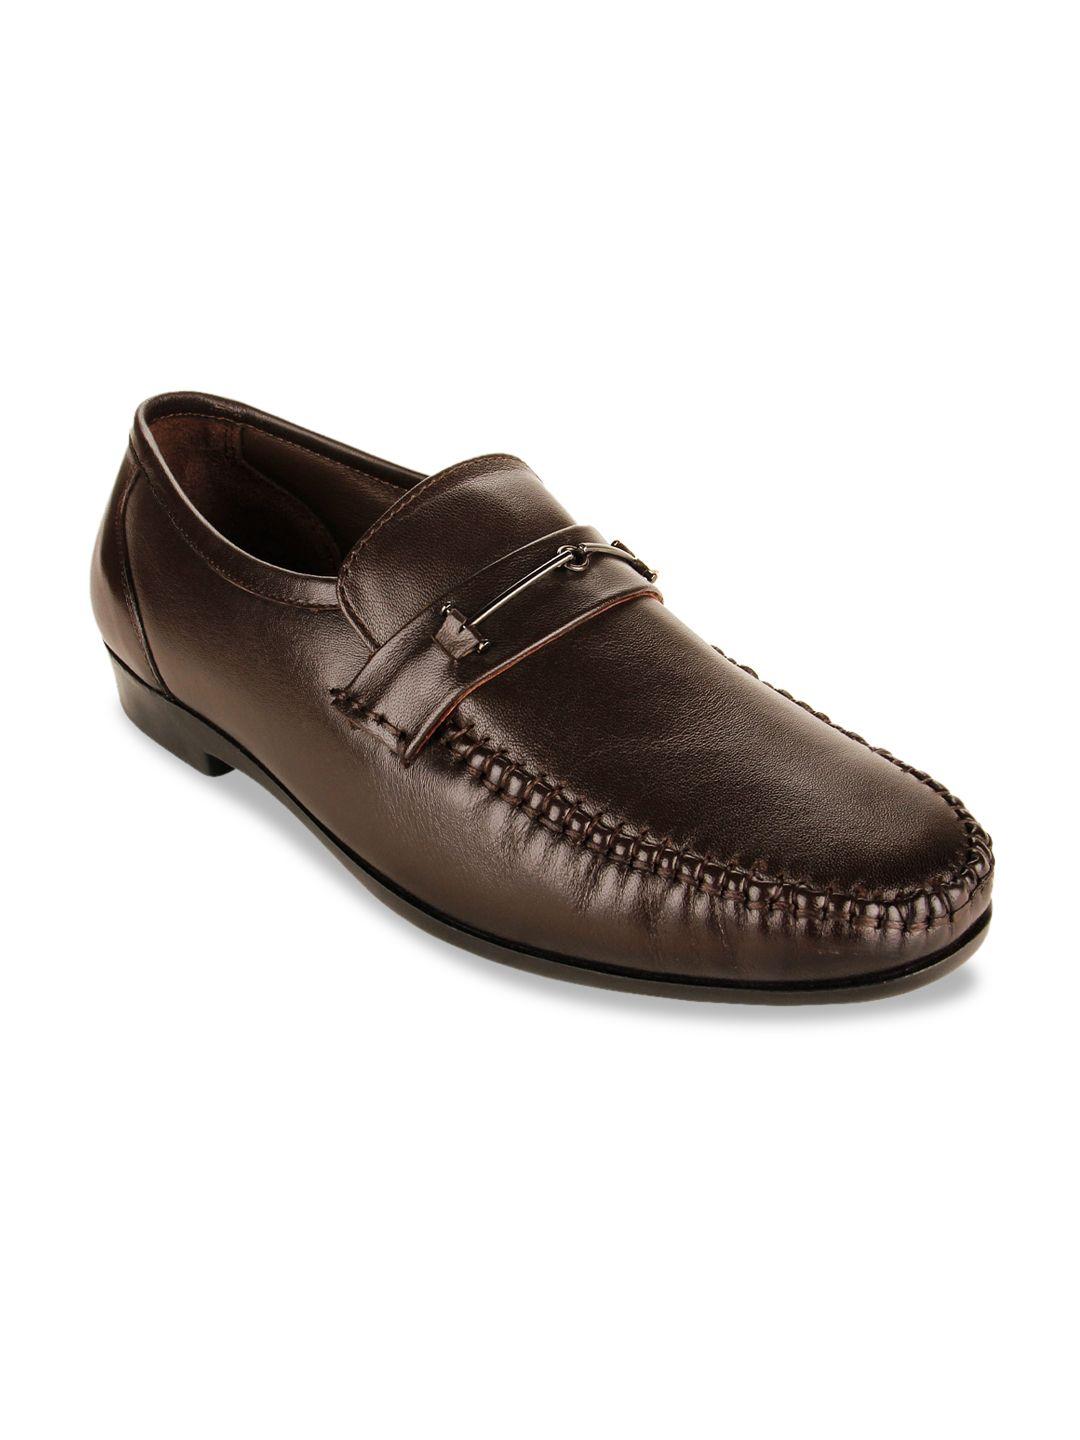 regal-men-brown-solid-leather-formal-loafers